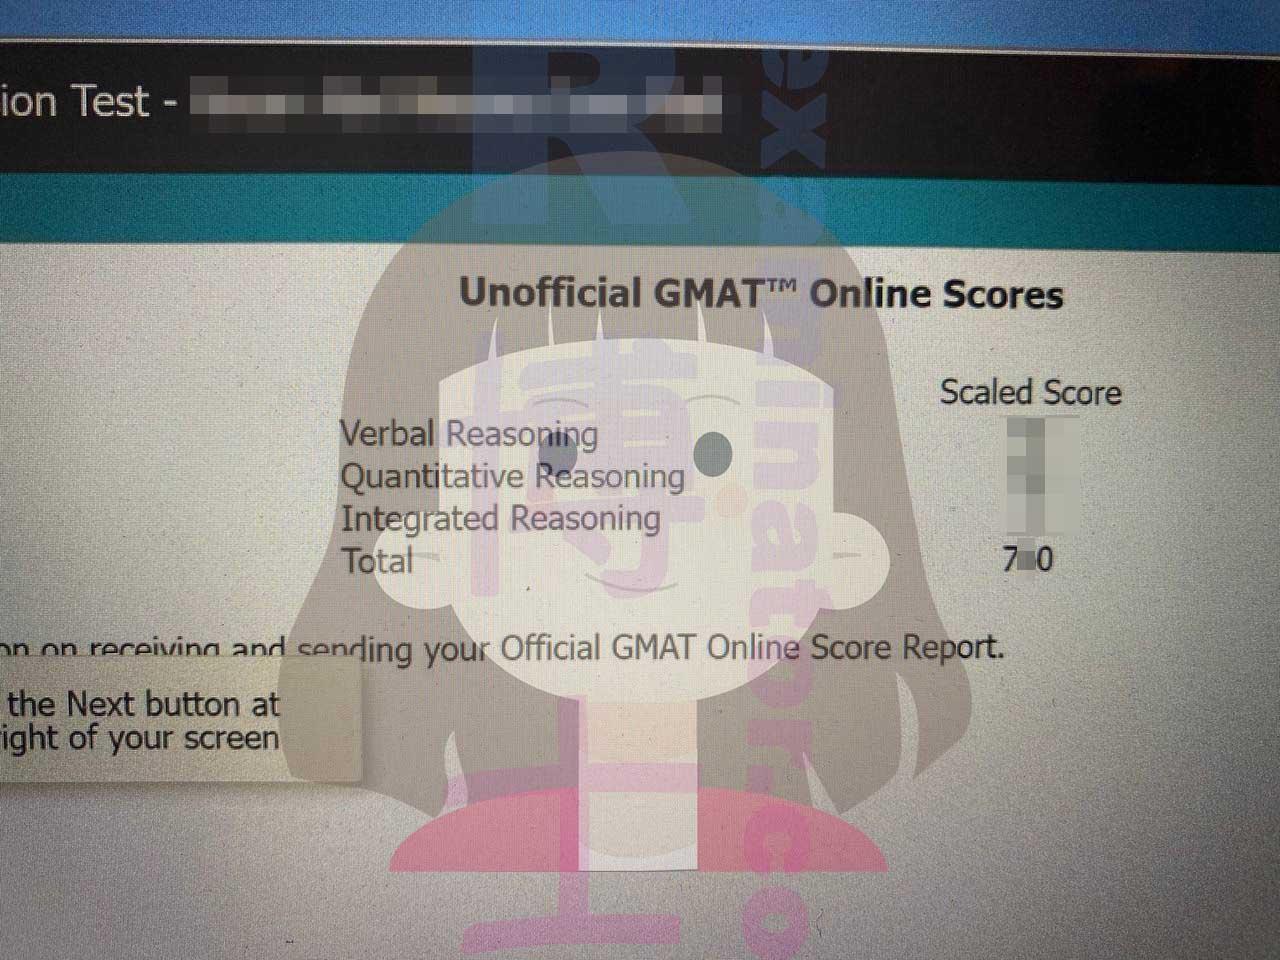 score image for GMAT Proxy Testing success story #491